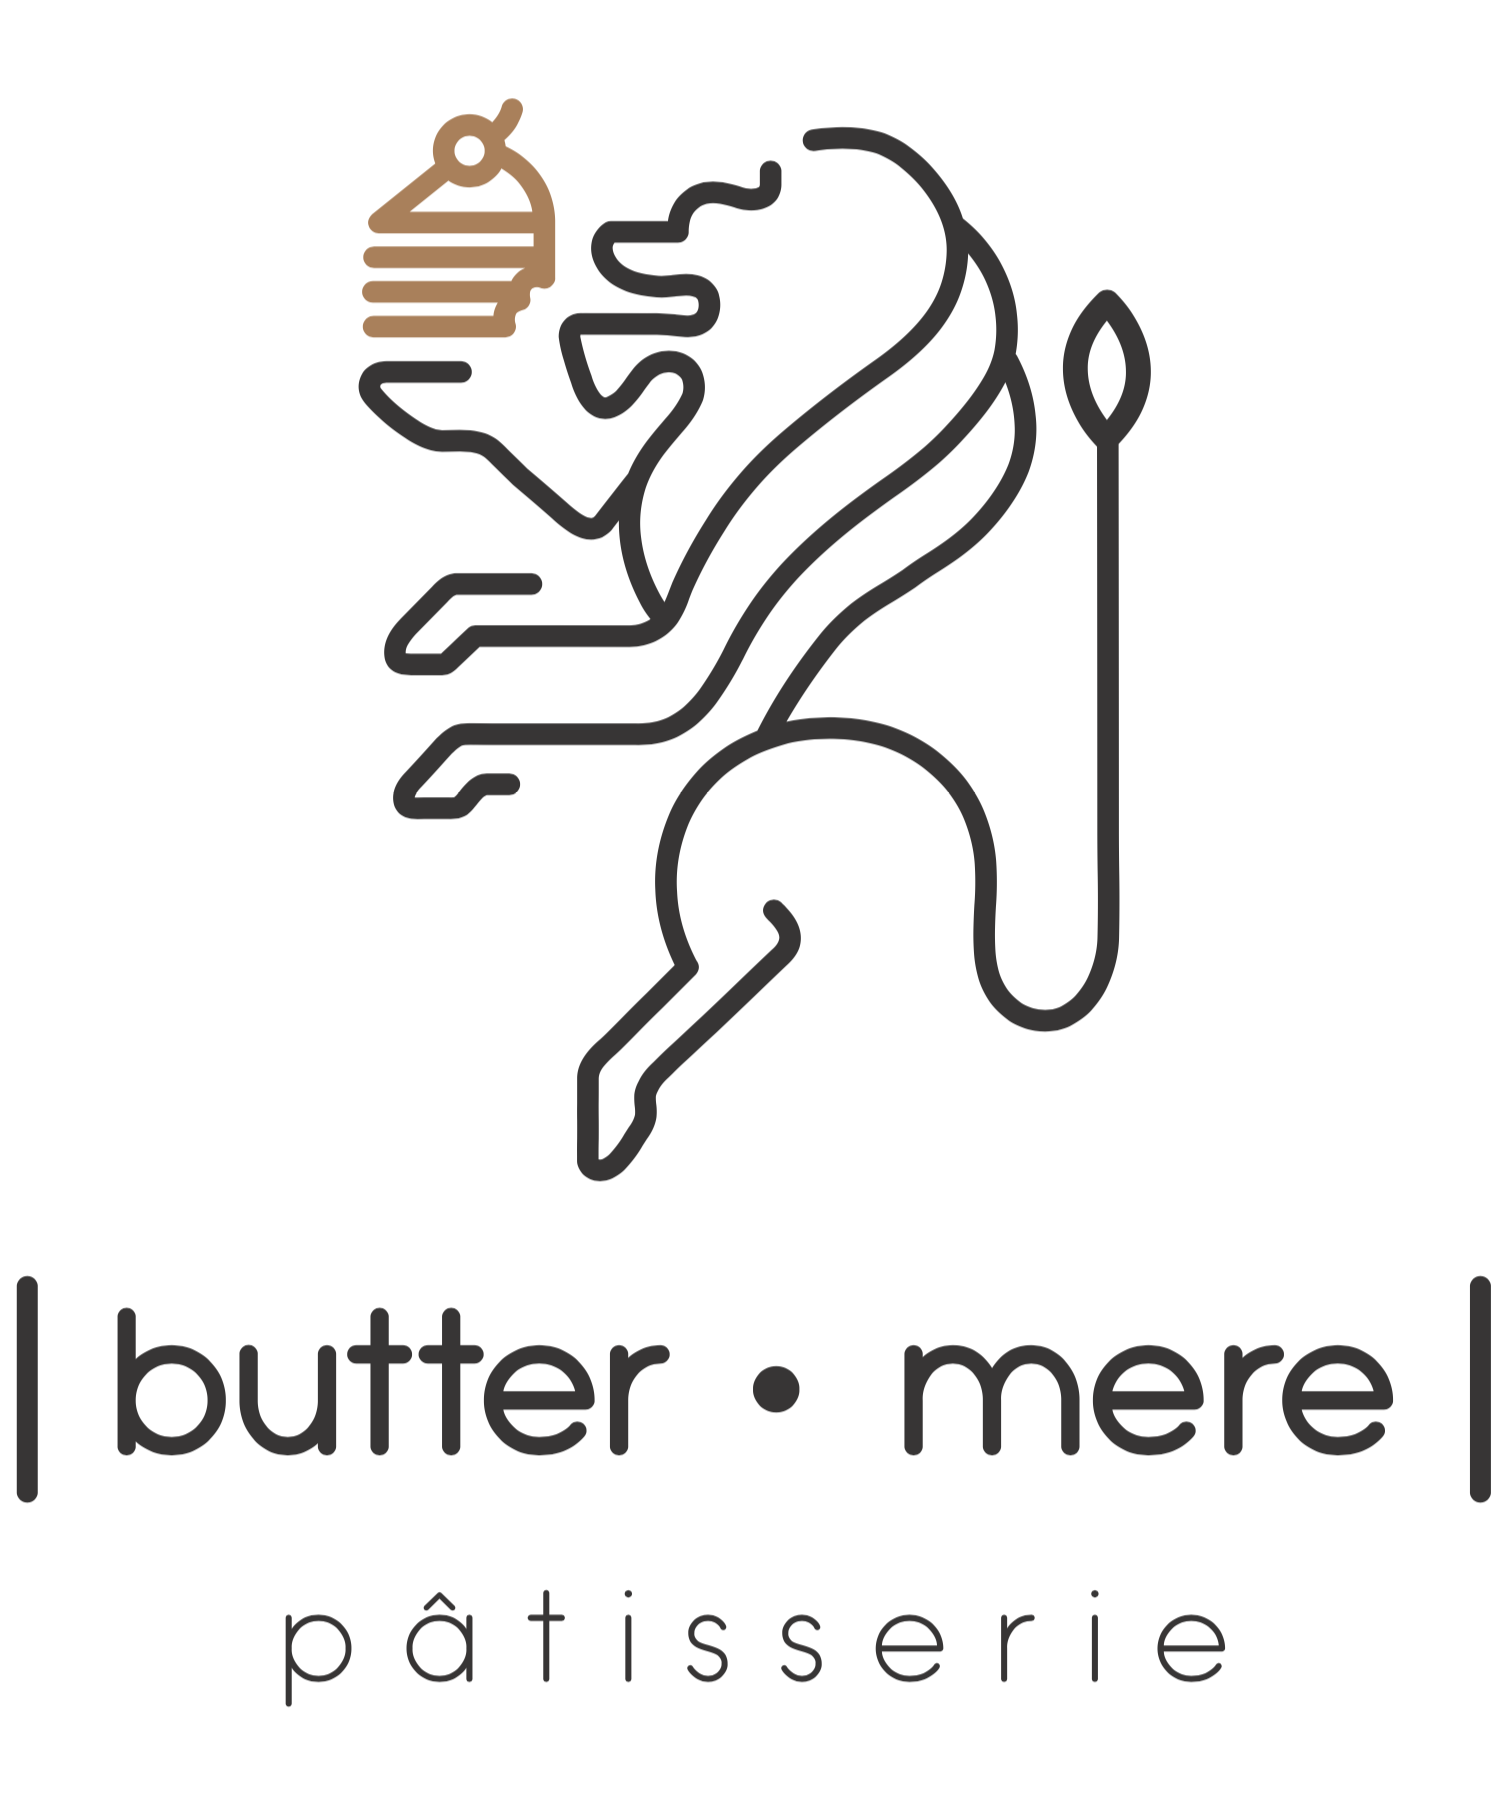 Buttermere Patisserie